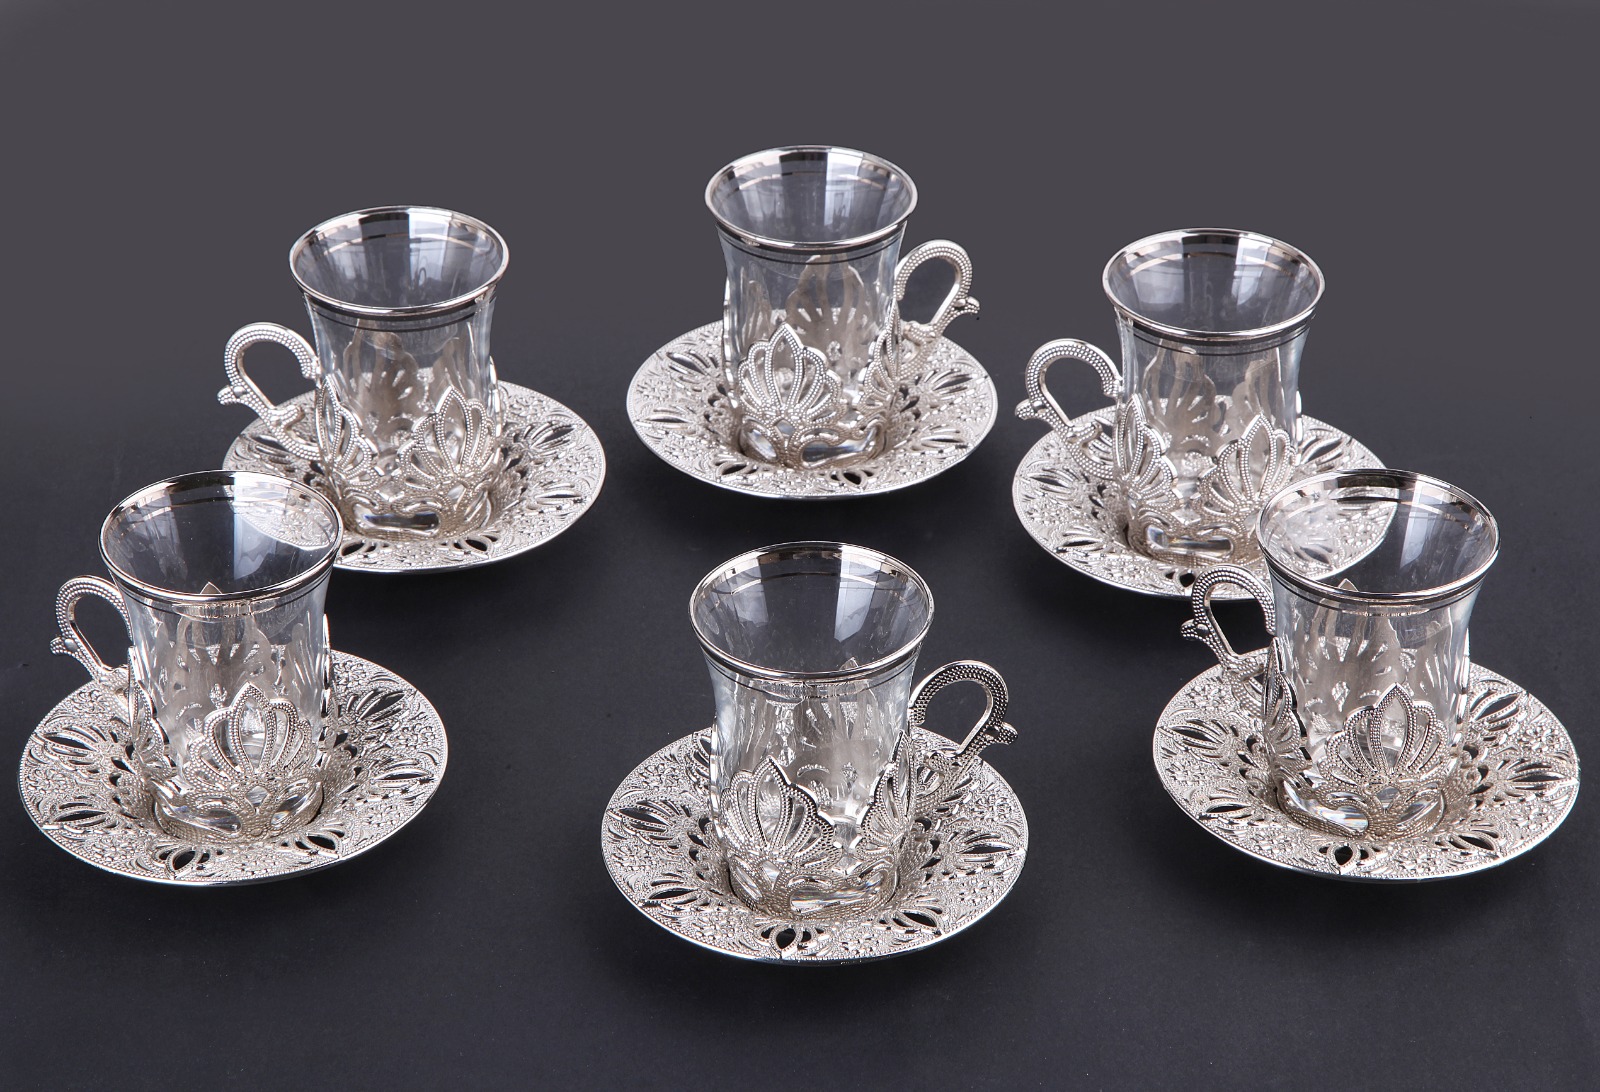 https://traditionalturk.com/wp-content/uploads/2020/04/2020-latest-collection-ahu-silver-color-turkish-tea-cups-set-2.jpg